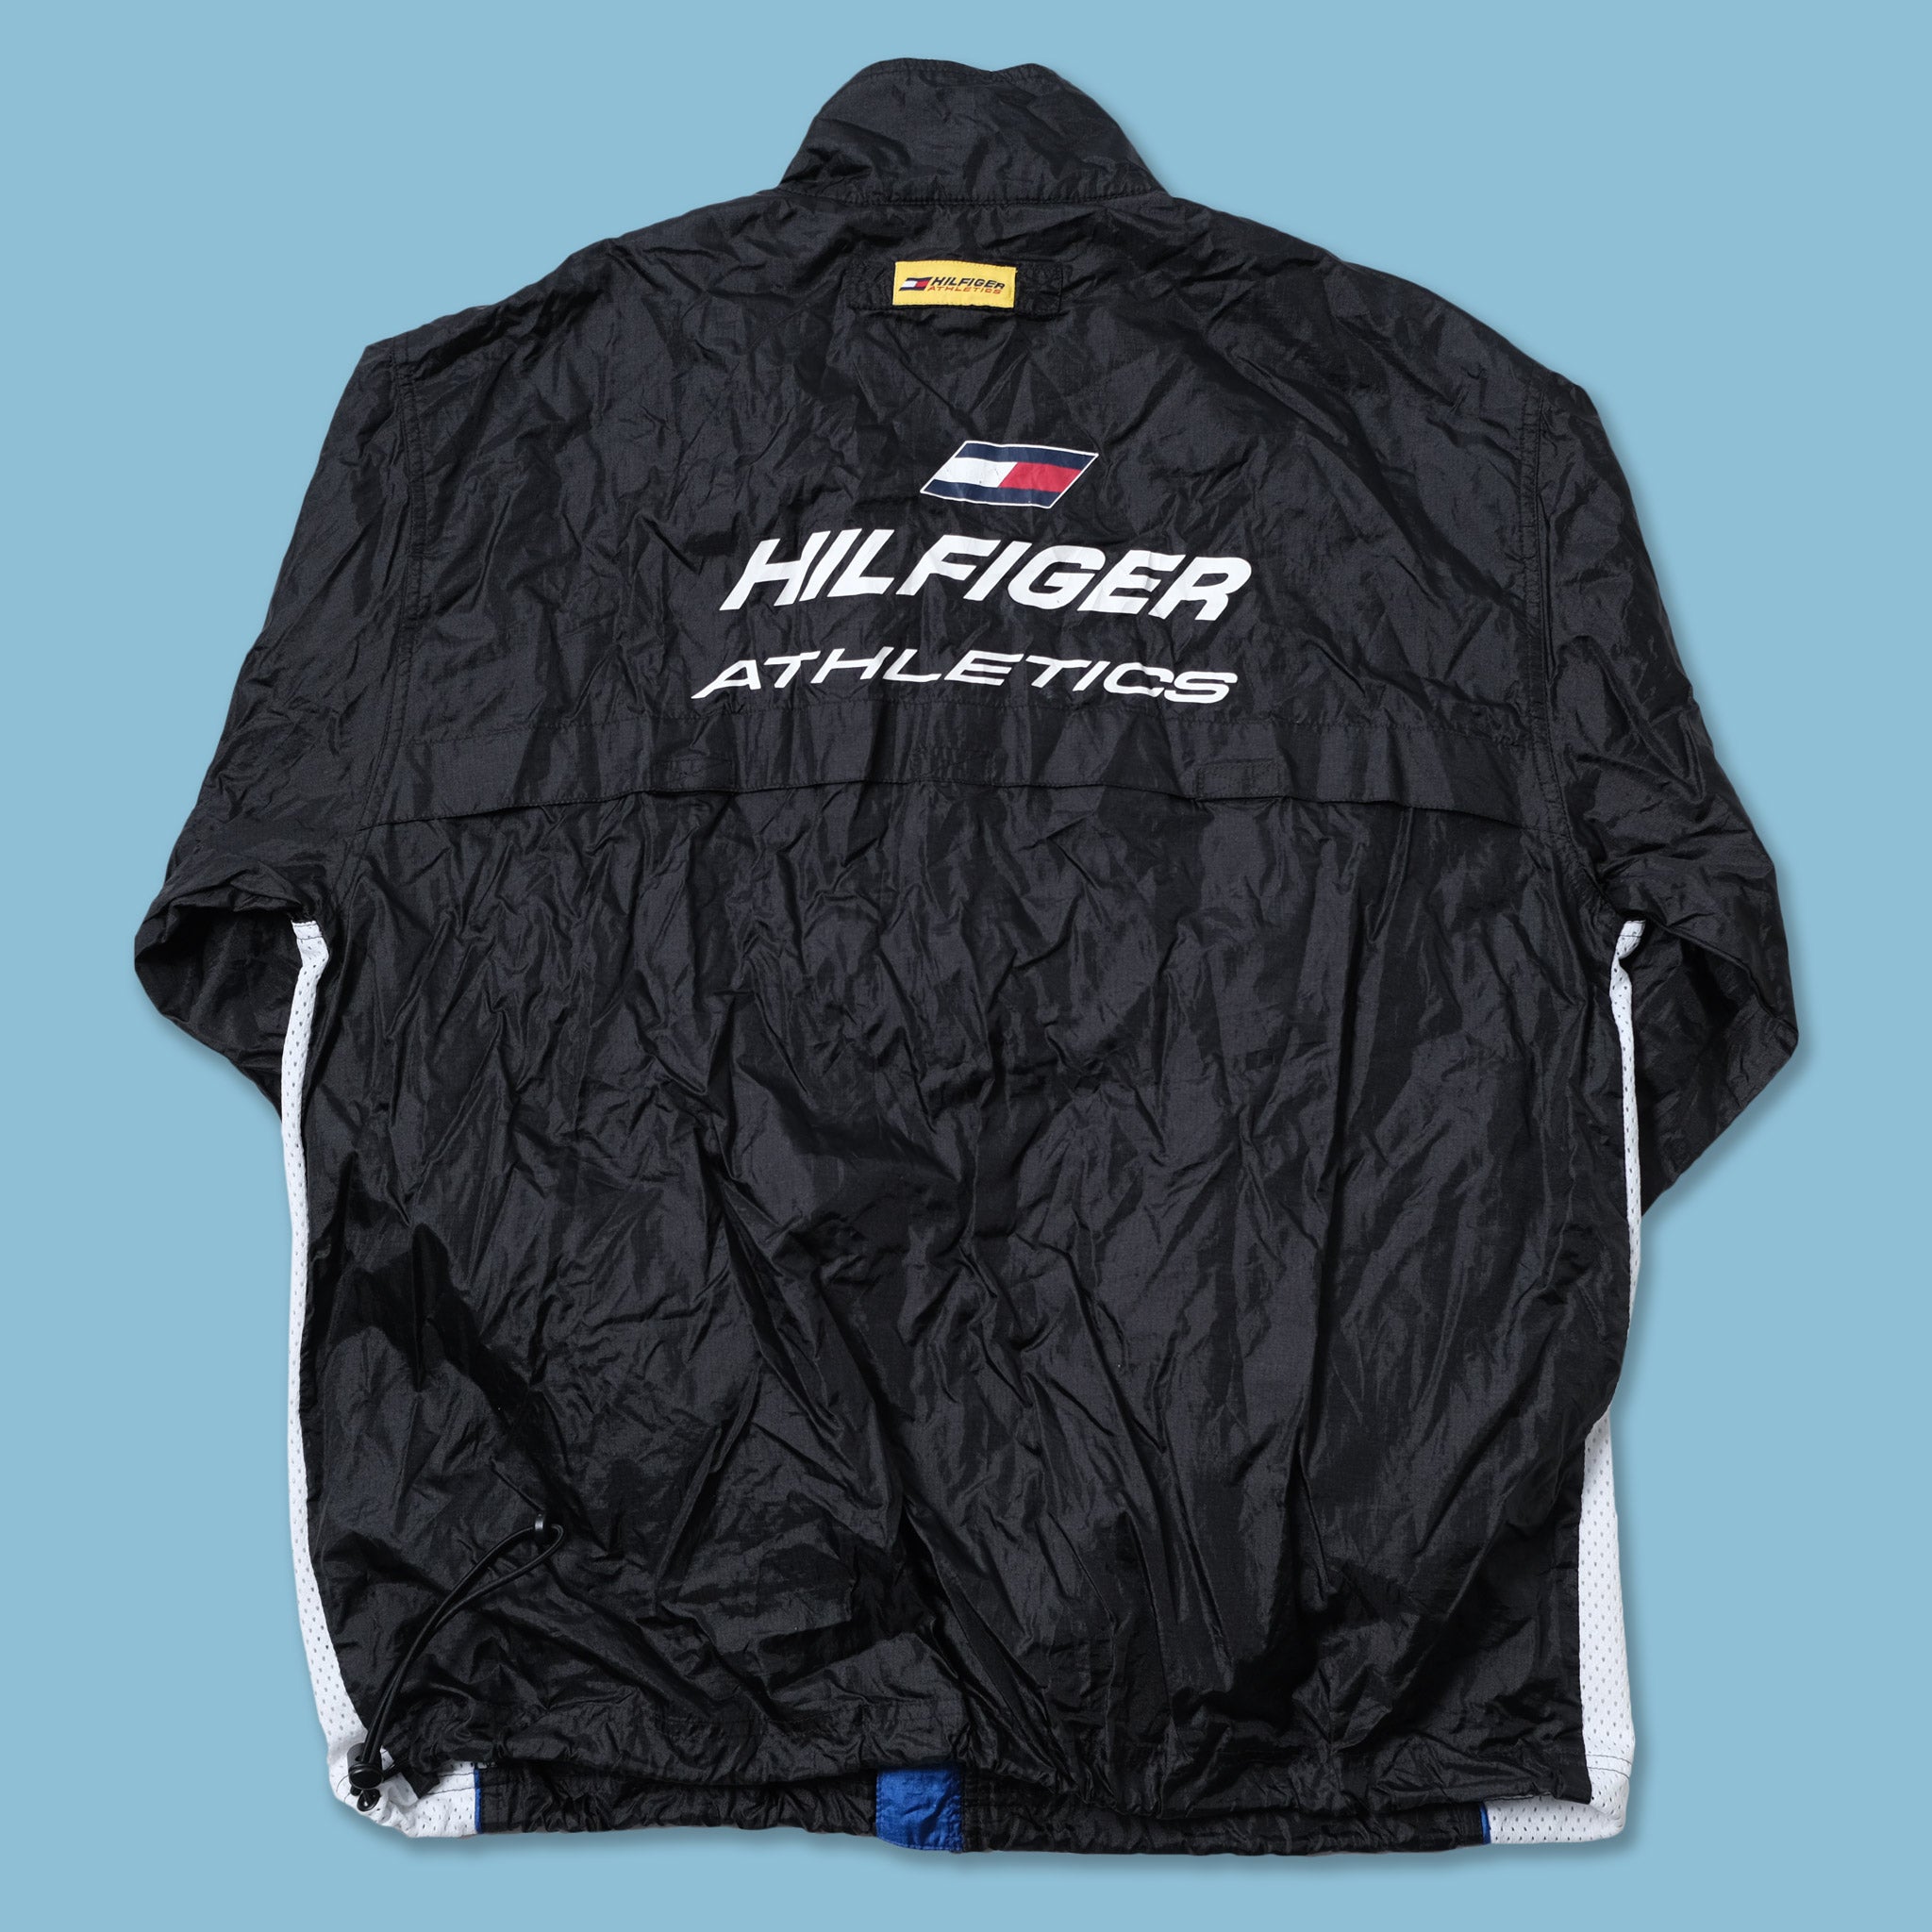 Tommy Hilfiger Athletics Jacket Large | Double Double